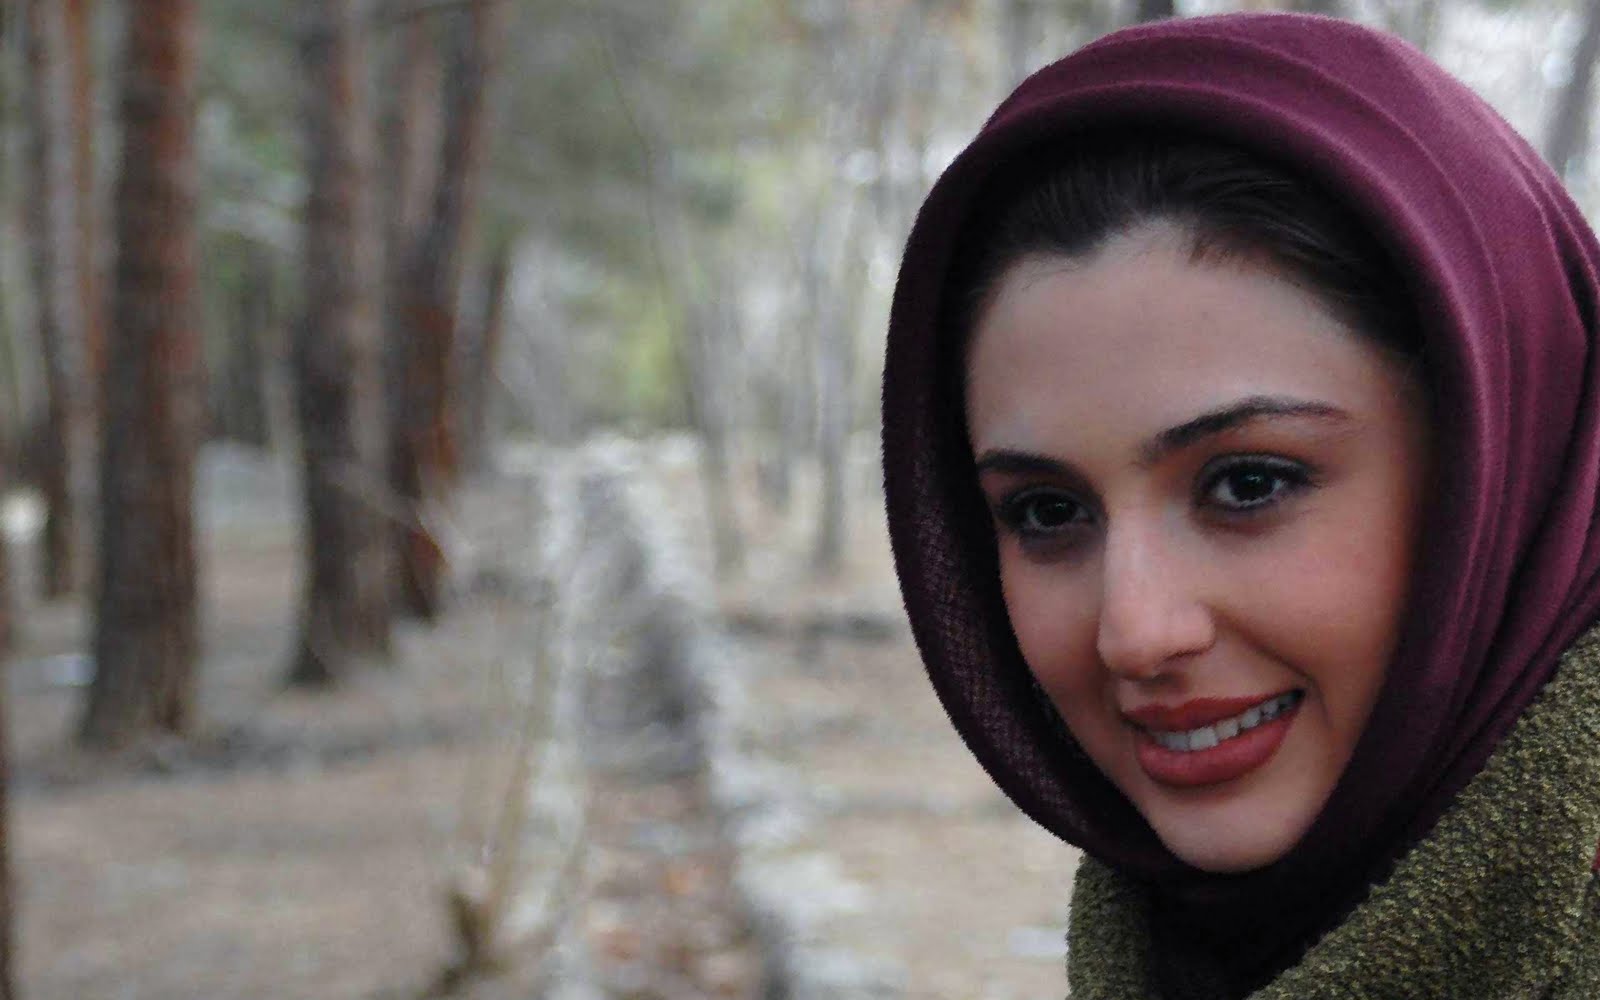 Hot iranian girl image fcuk